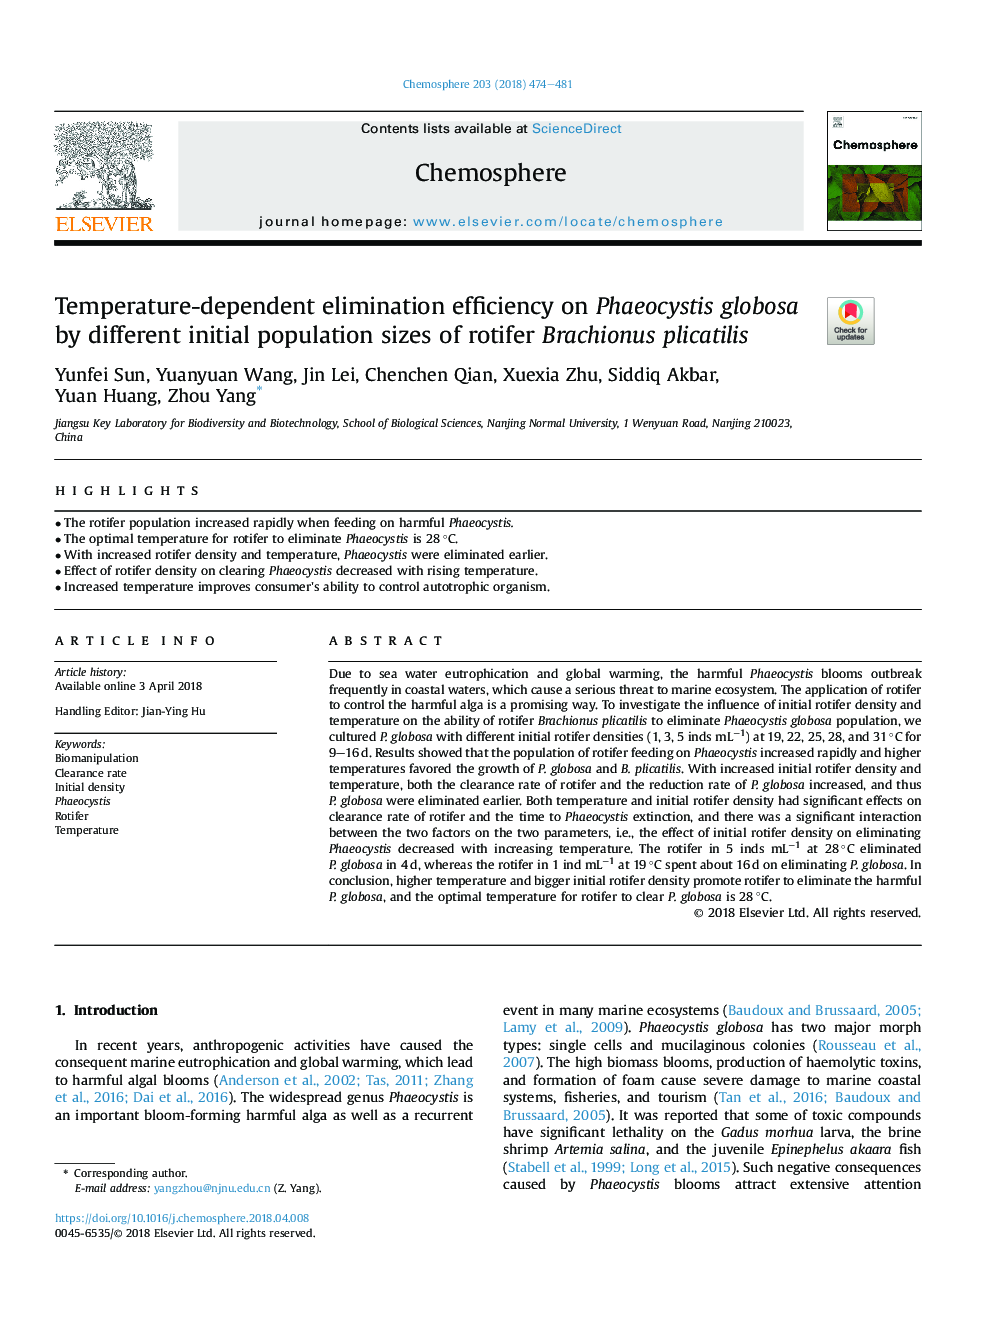 Temperature-dependent elimination efficiency on Phaeocystis globosa by different initial population sizes of rotifer Brachionus plicatilis